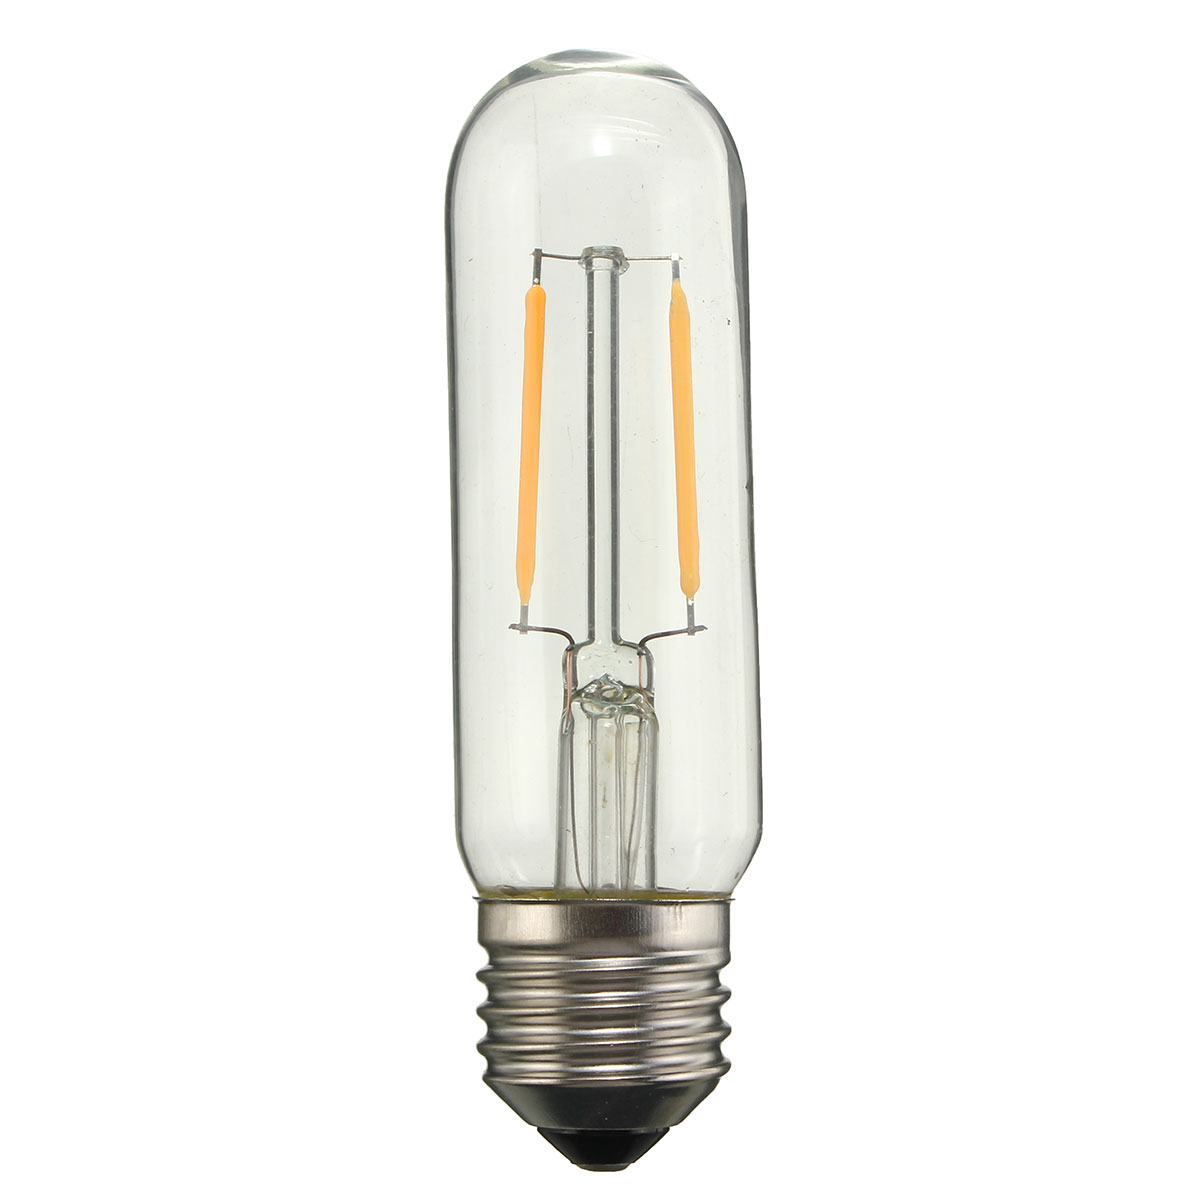 Dimmable-T10-E27-2W-COB-Pure-White-Warm-White-200Lumens-Retro-Edison-Light-Bulb-AC110V-AC220V-1070533-5